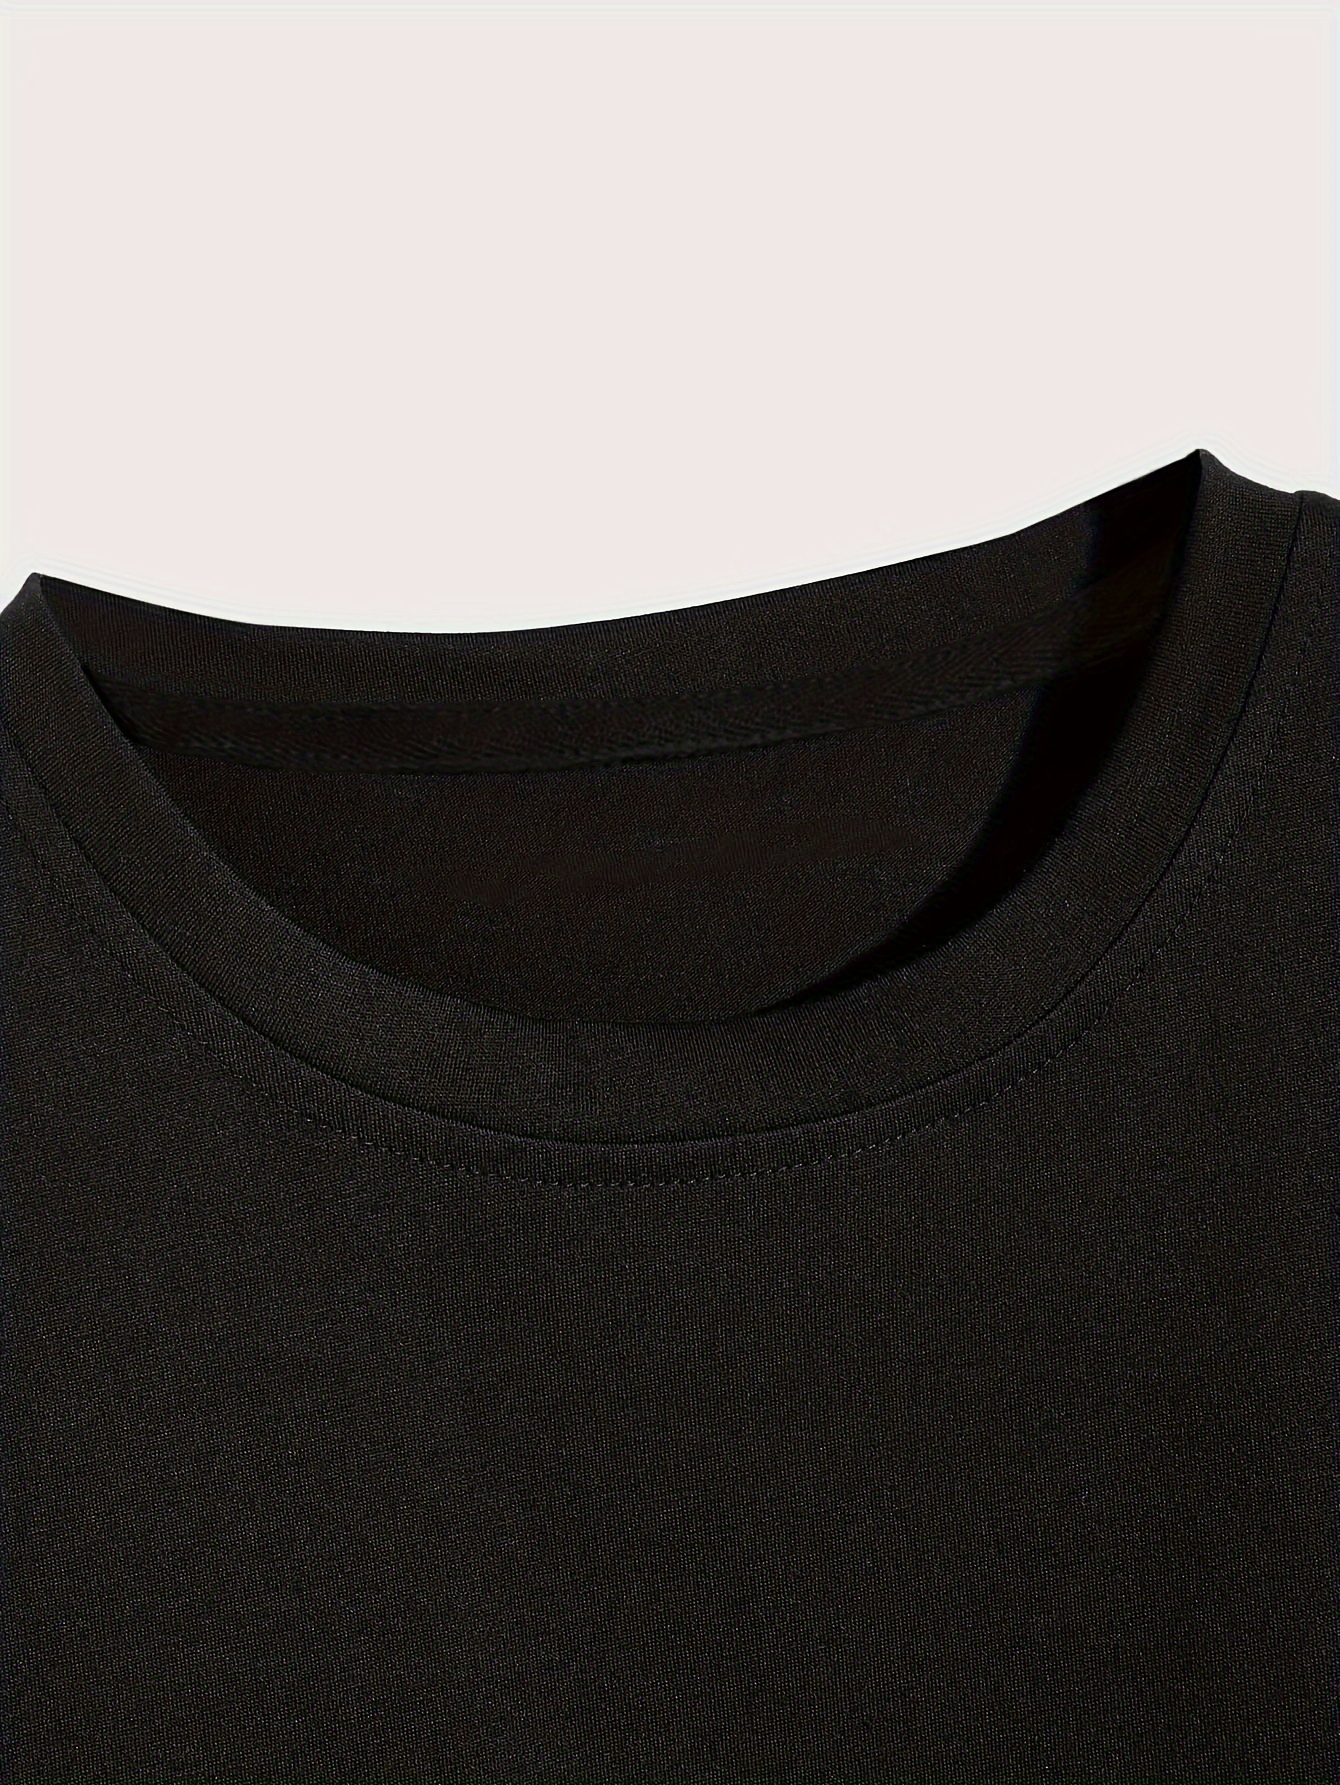 california 1998 print t shirt crew neck short sleeve t shirt casual sport tops womens clothing details 3